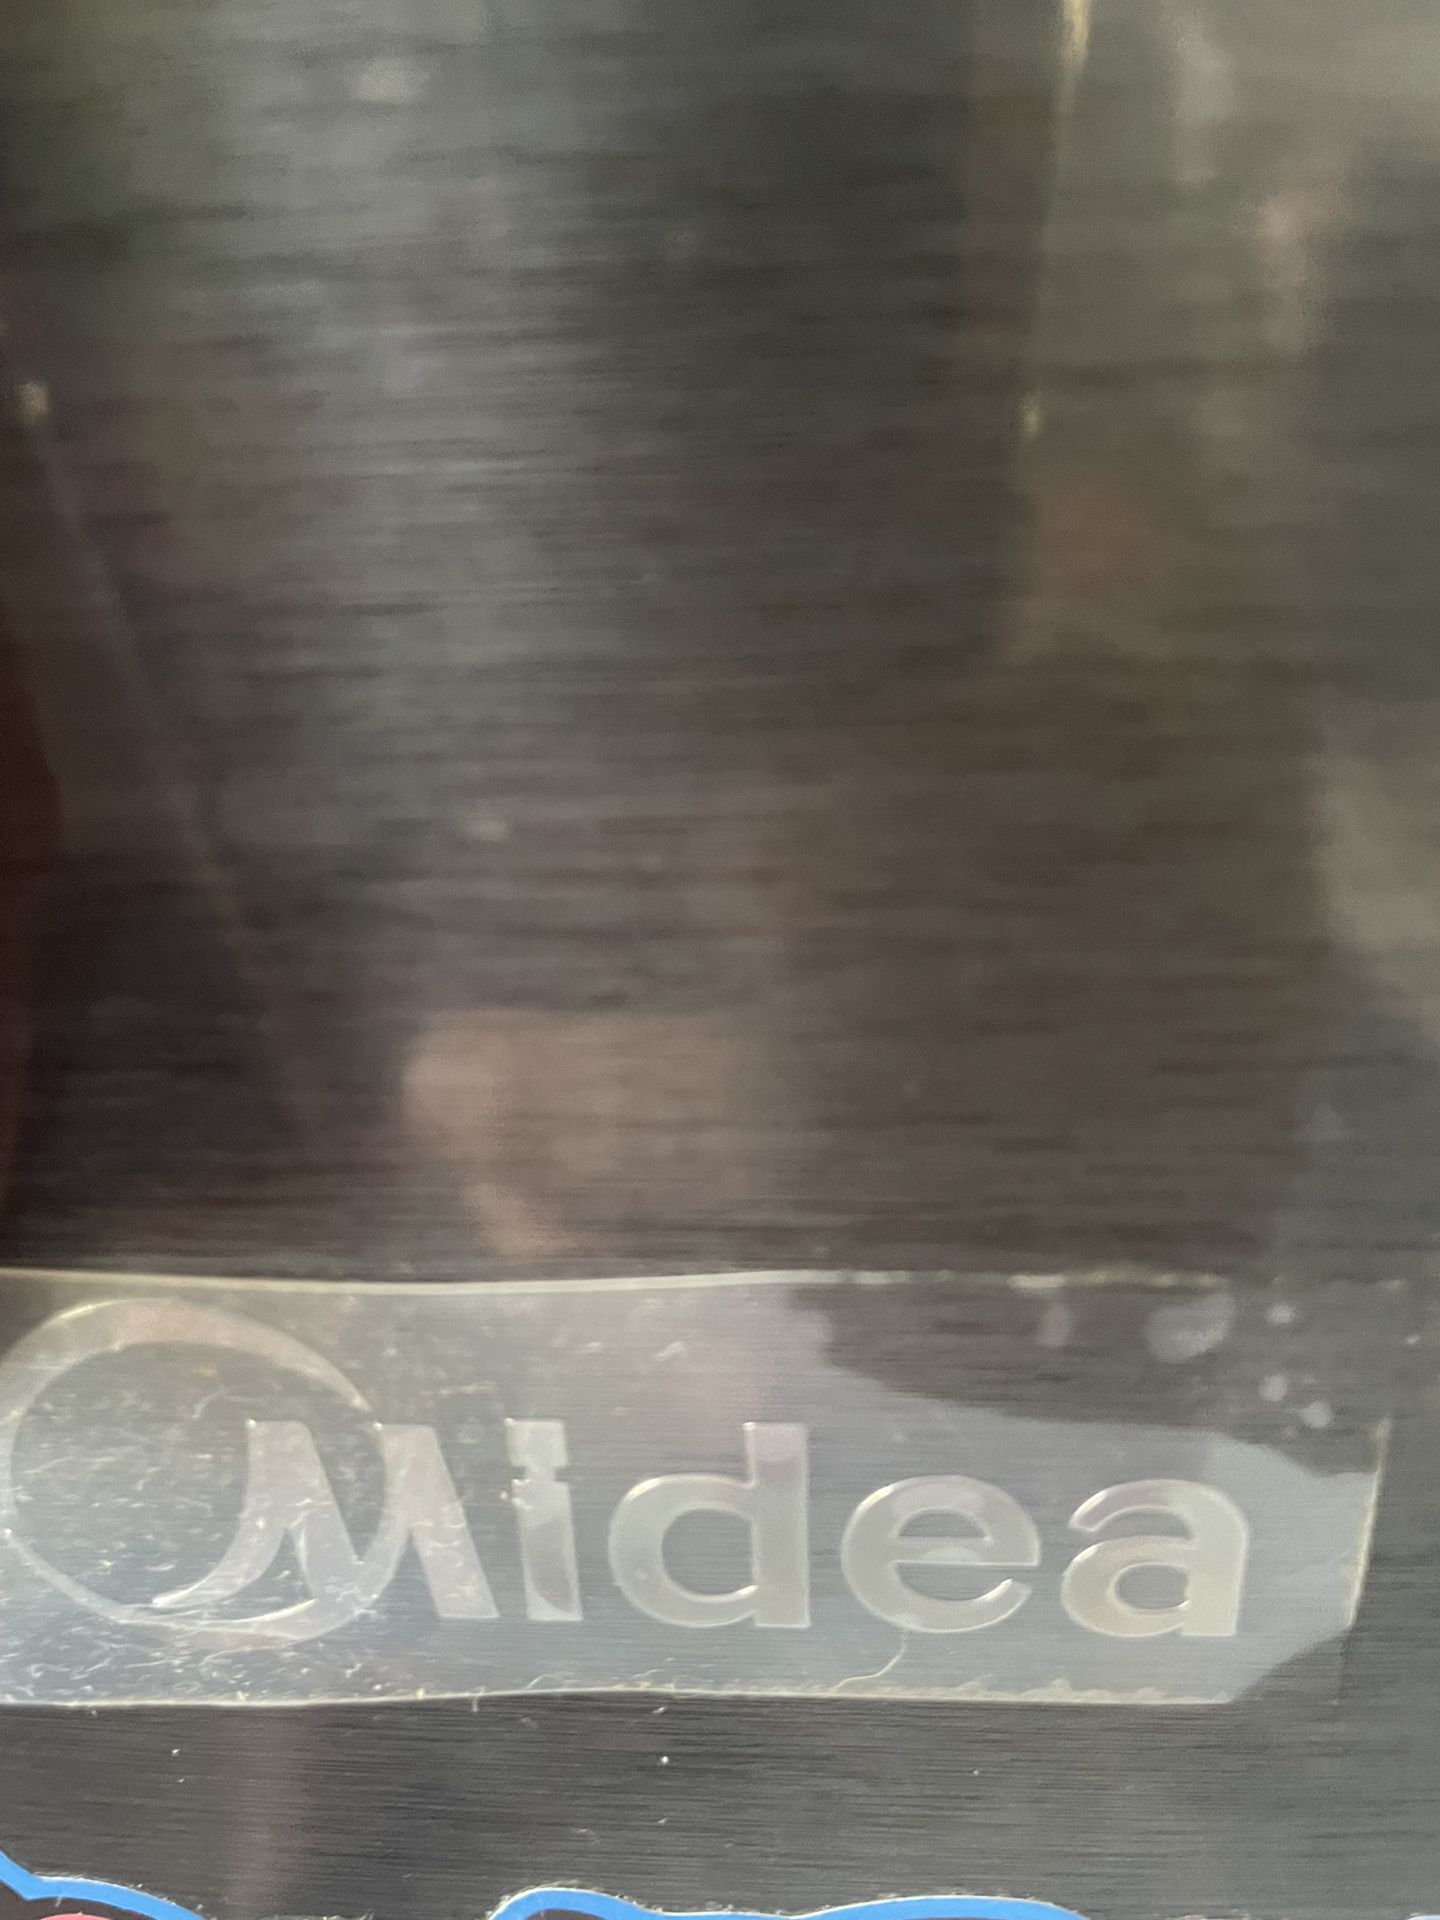 $50 Midea Mini Fridge with Freezer 3.3ft